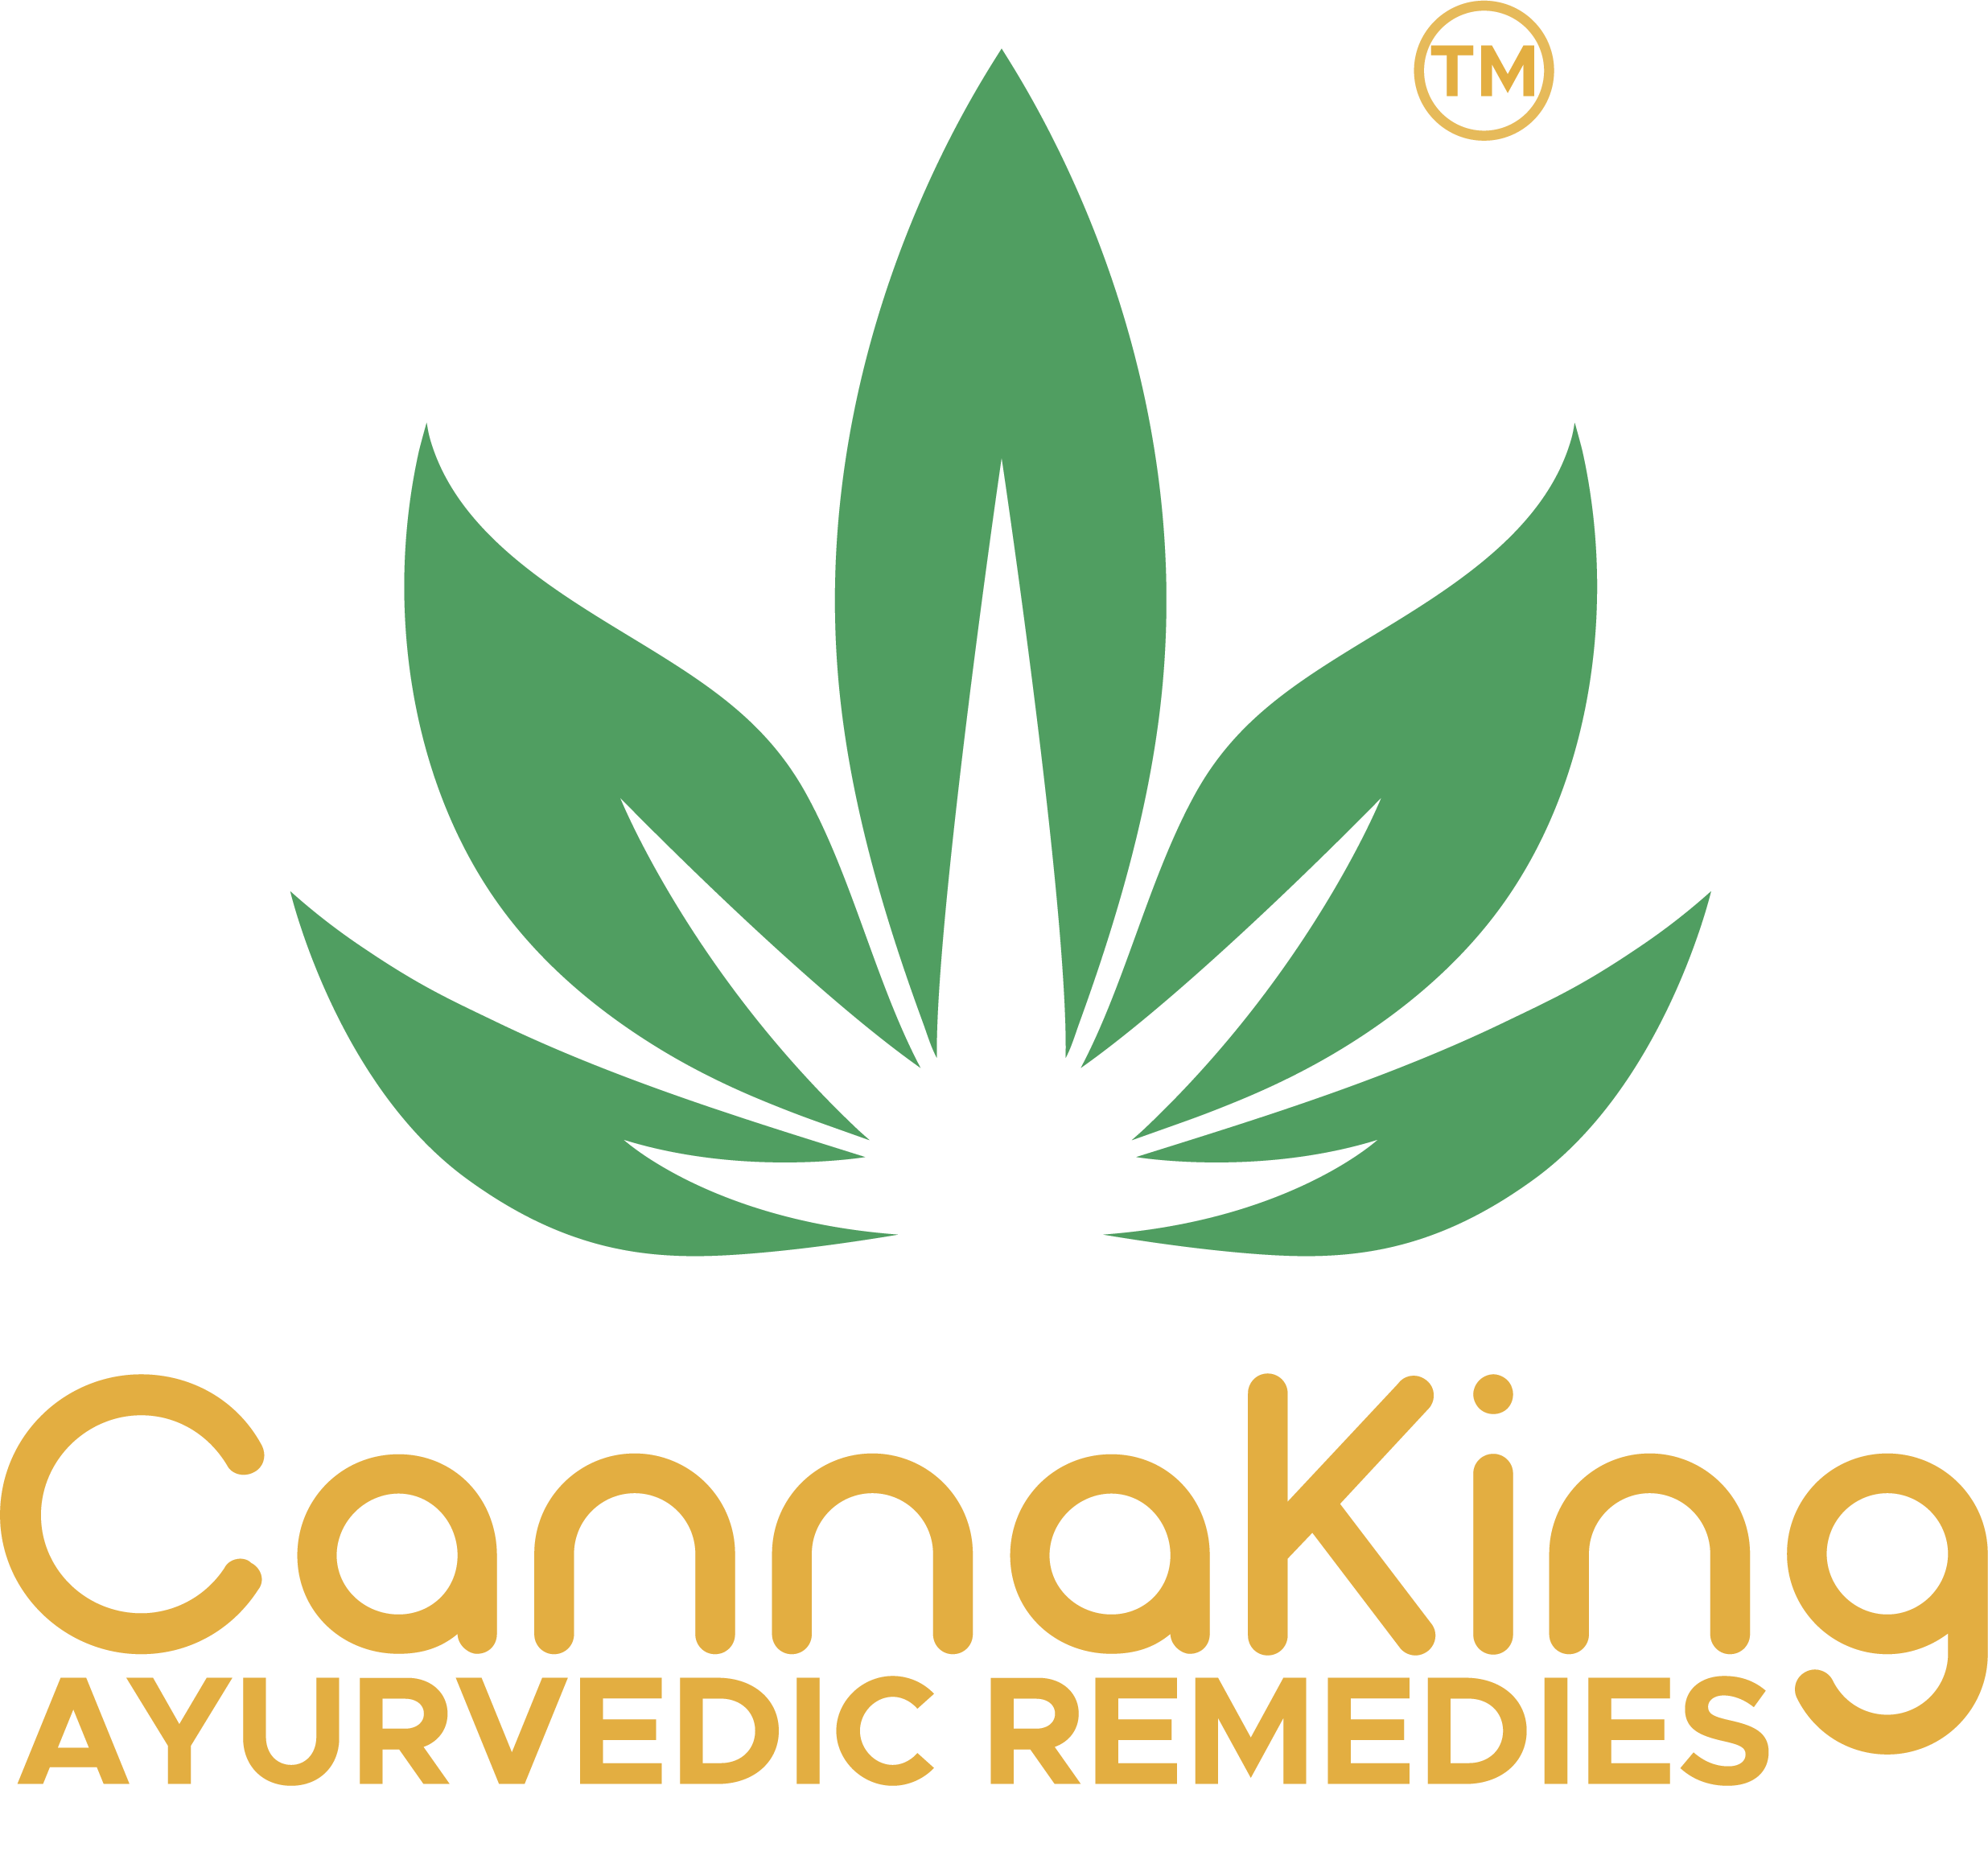 LSleep aid/ Insomnia reliever ayurvedic medication subscription pack for medical Cannabis/ hemp/ vijaya Leaf extract